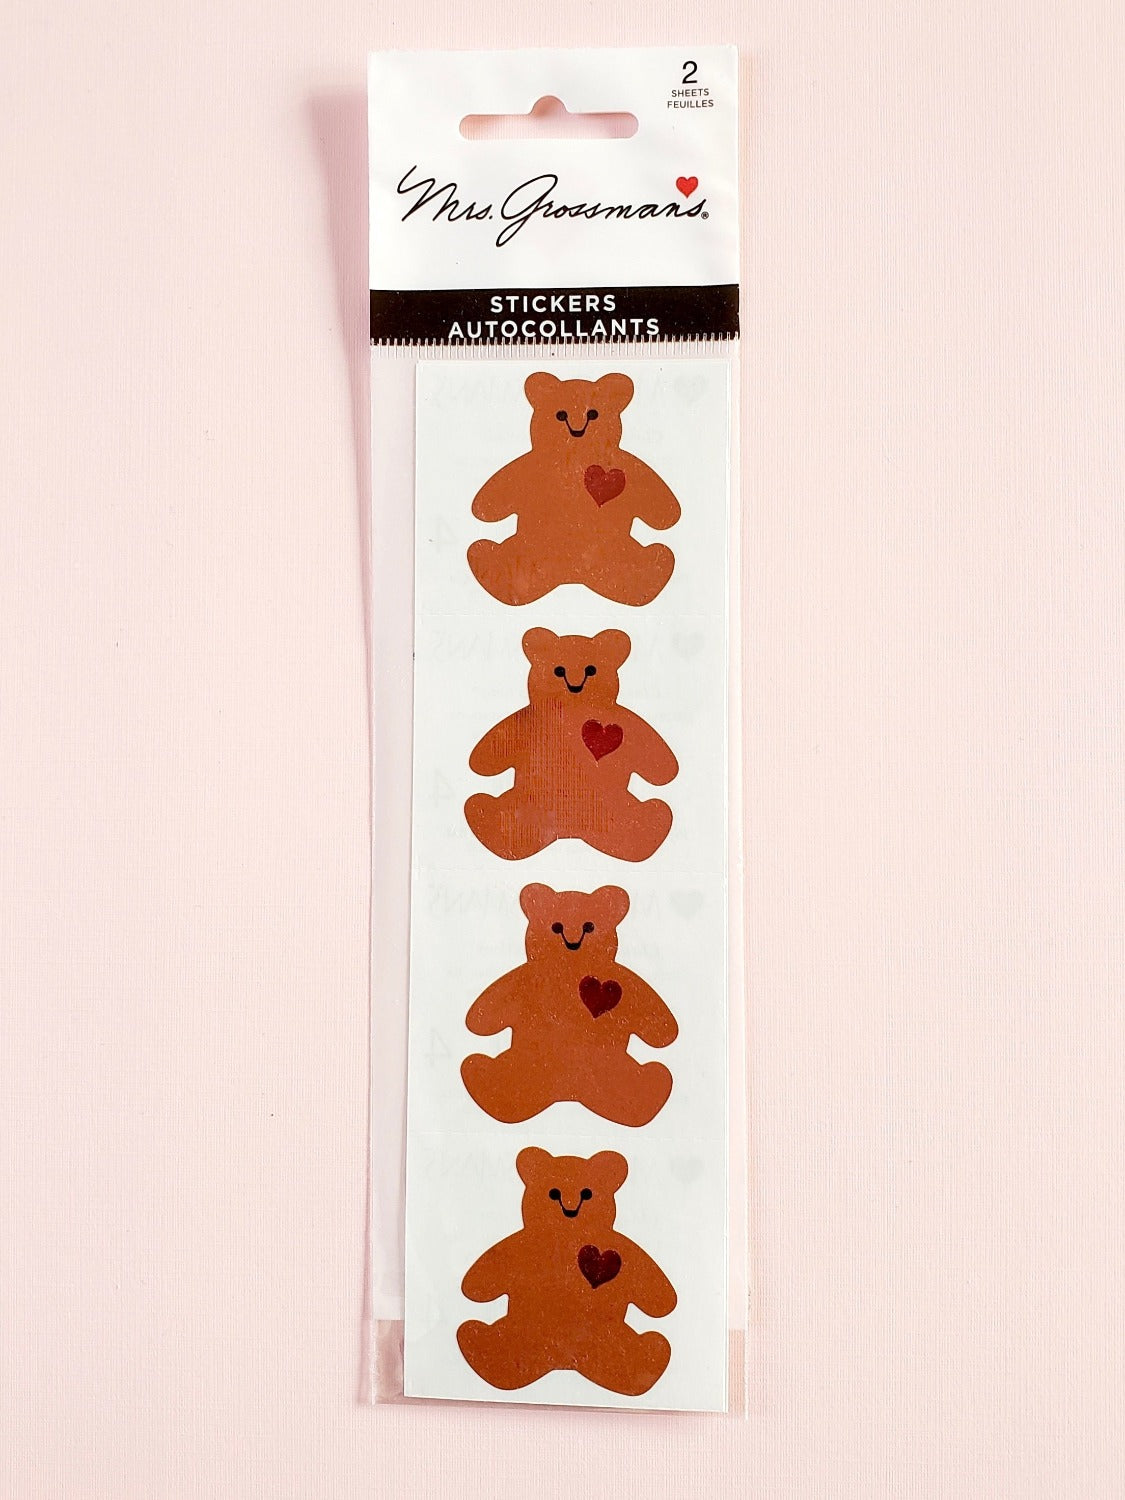 Mrs Grossman's Classic brown bear stickers